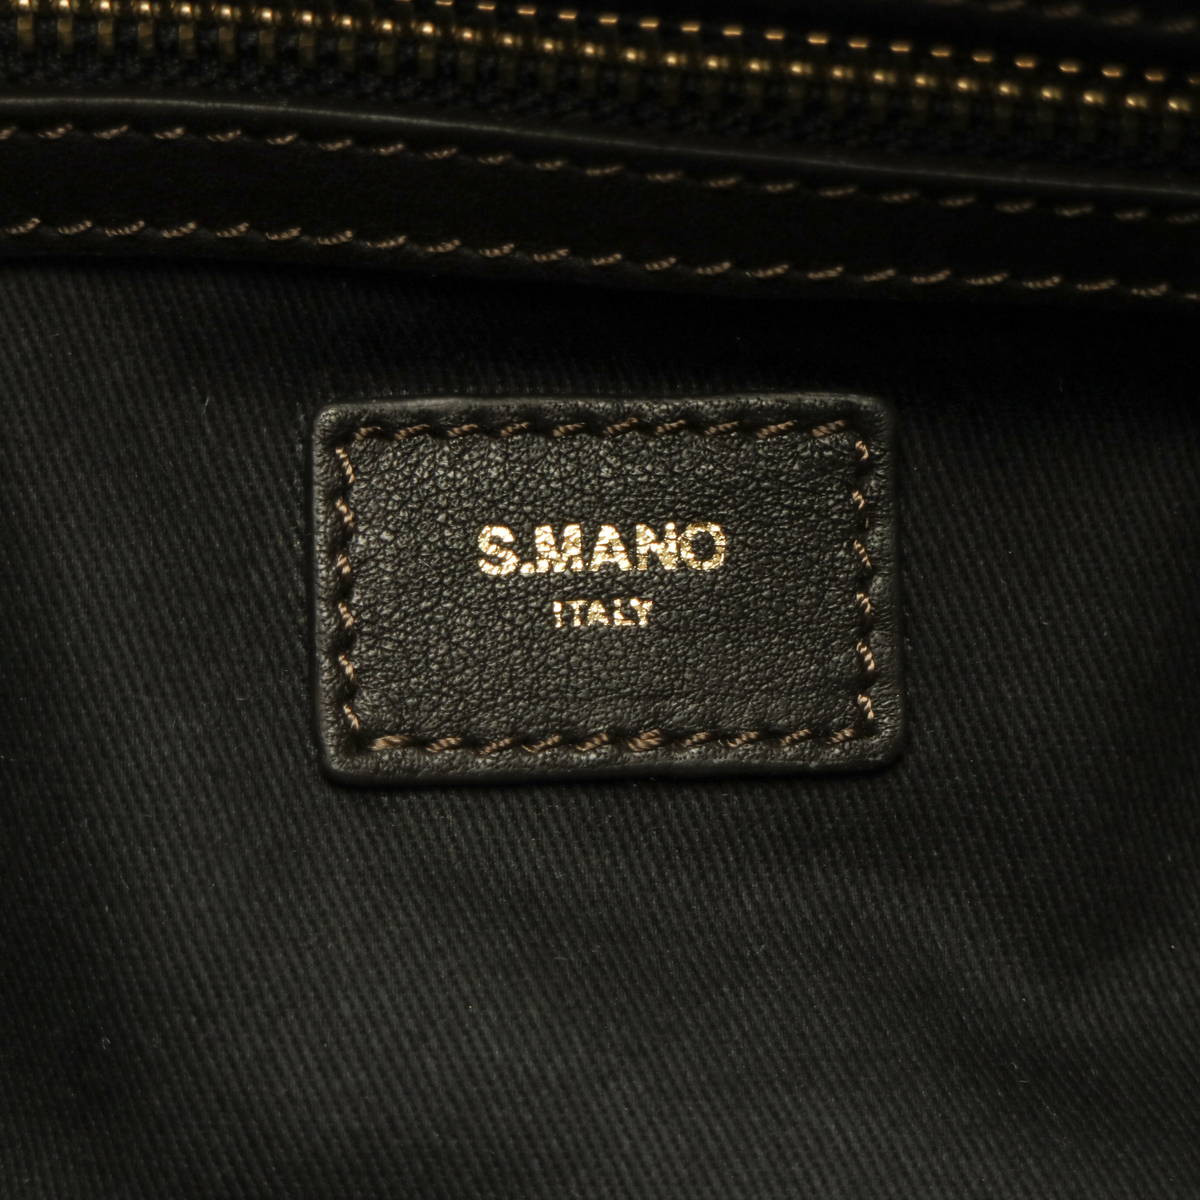 S.MANO エスマーノ DRAWSTRING BAG SMALL 巾着バッグ